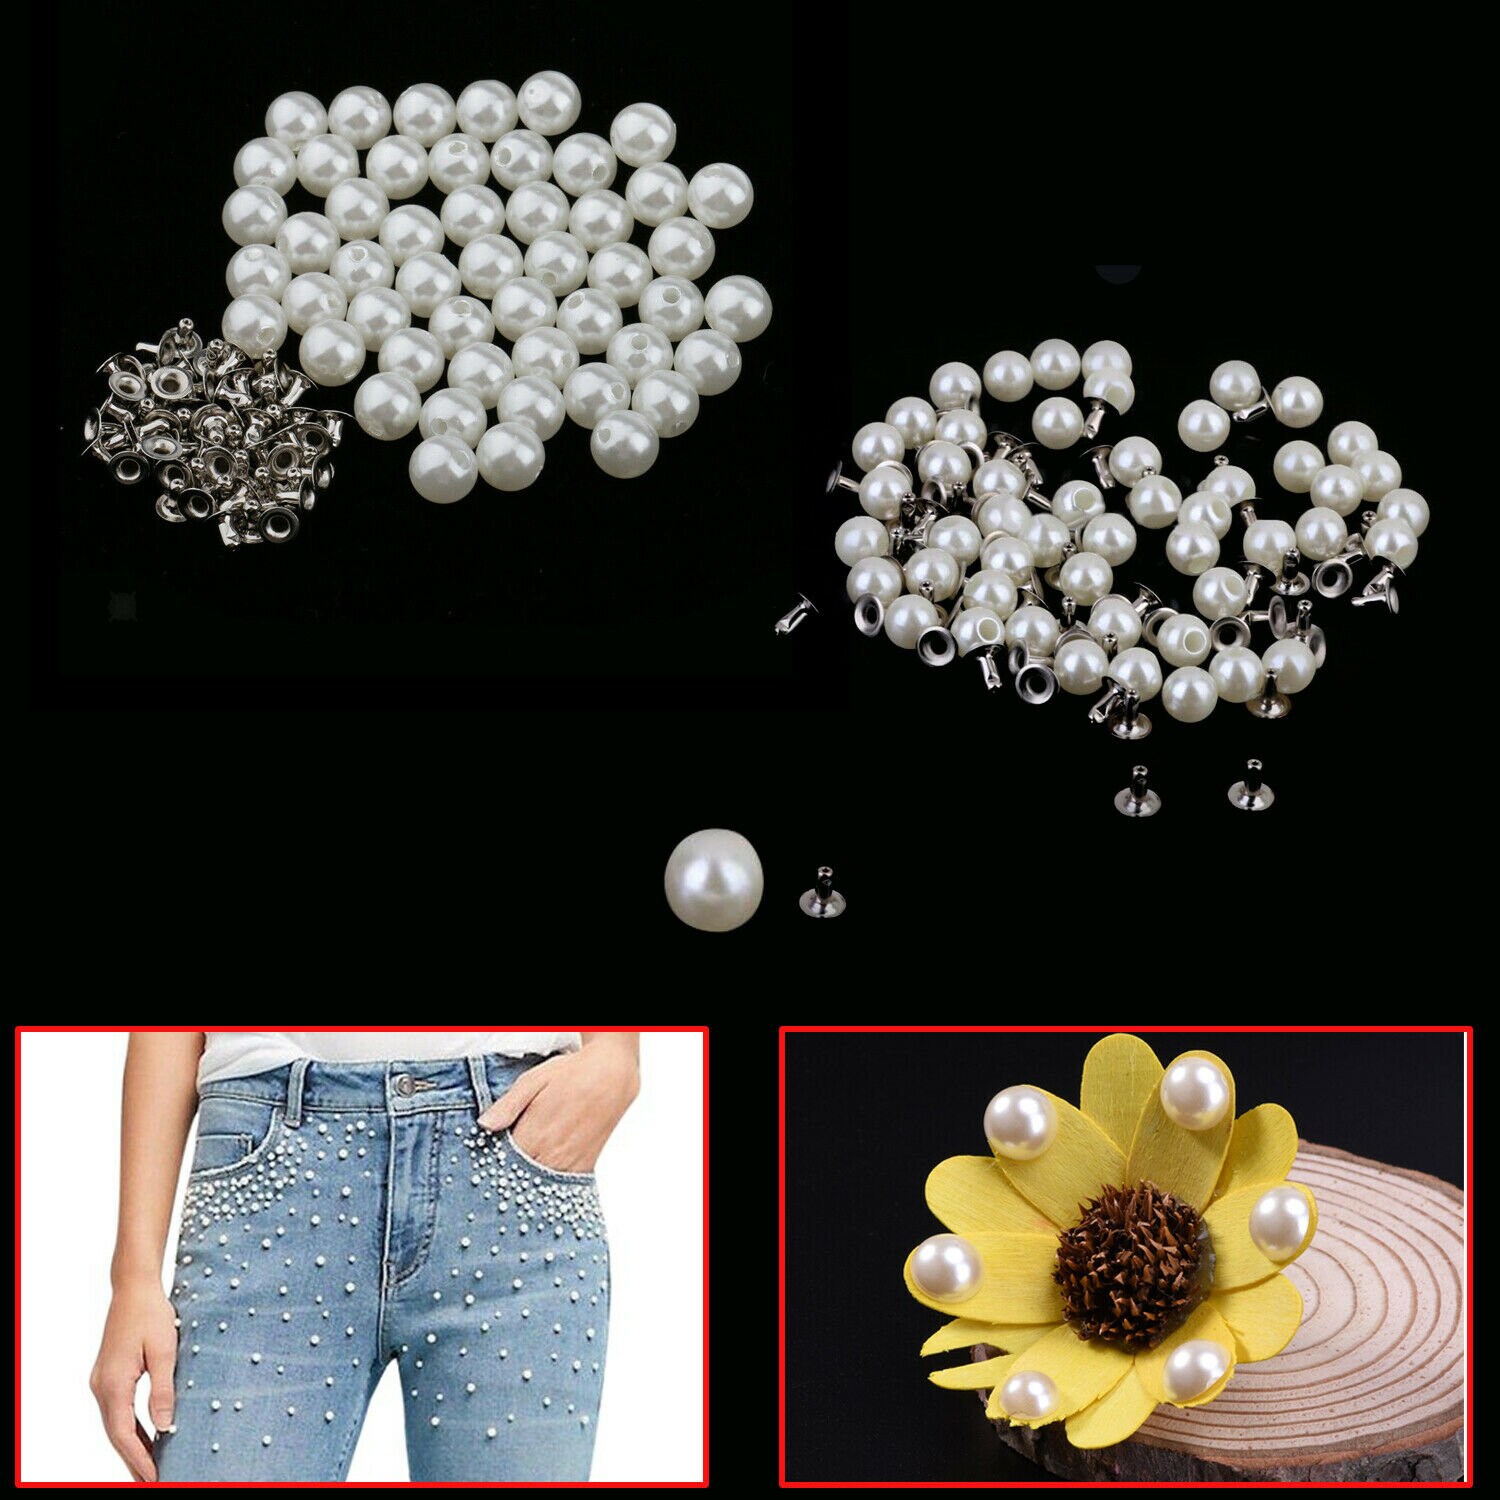 100pcs Pearls Rivets Studs Buttons for Bag Clothes Jeans Shoes Decor DIY Crafts